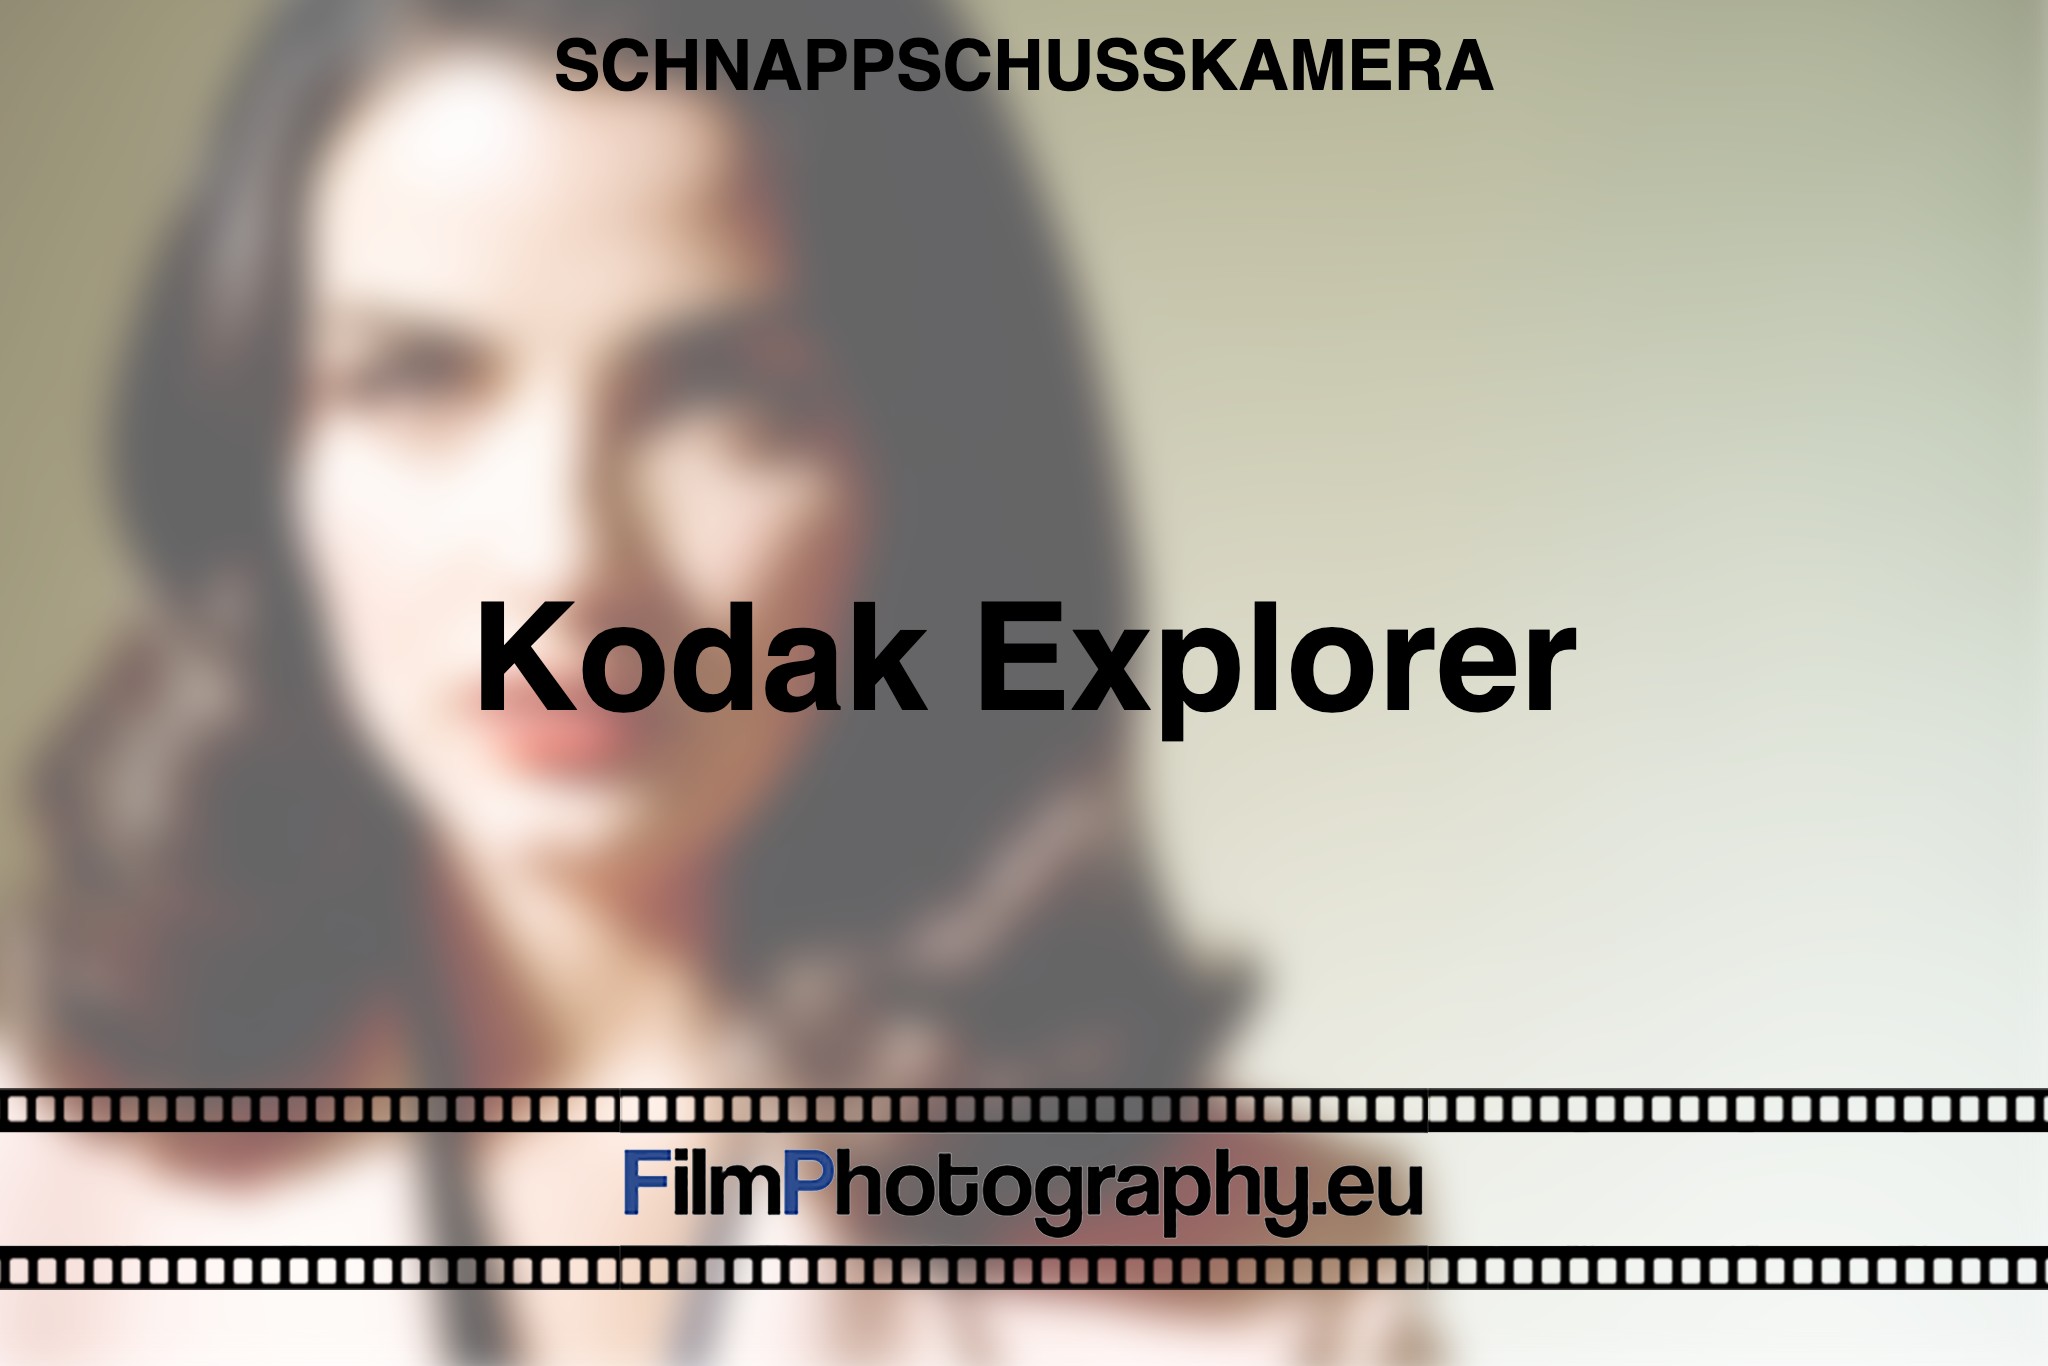 kodak-explorer-schnappschusskamera-bnv